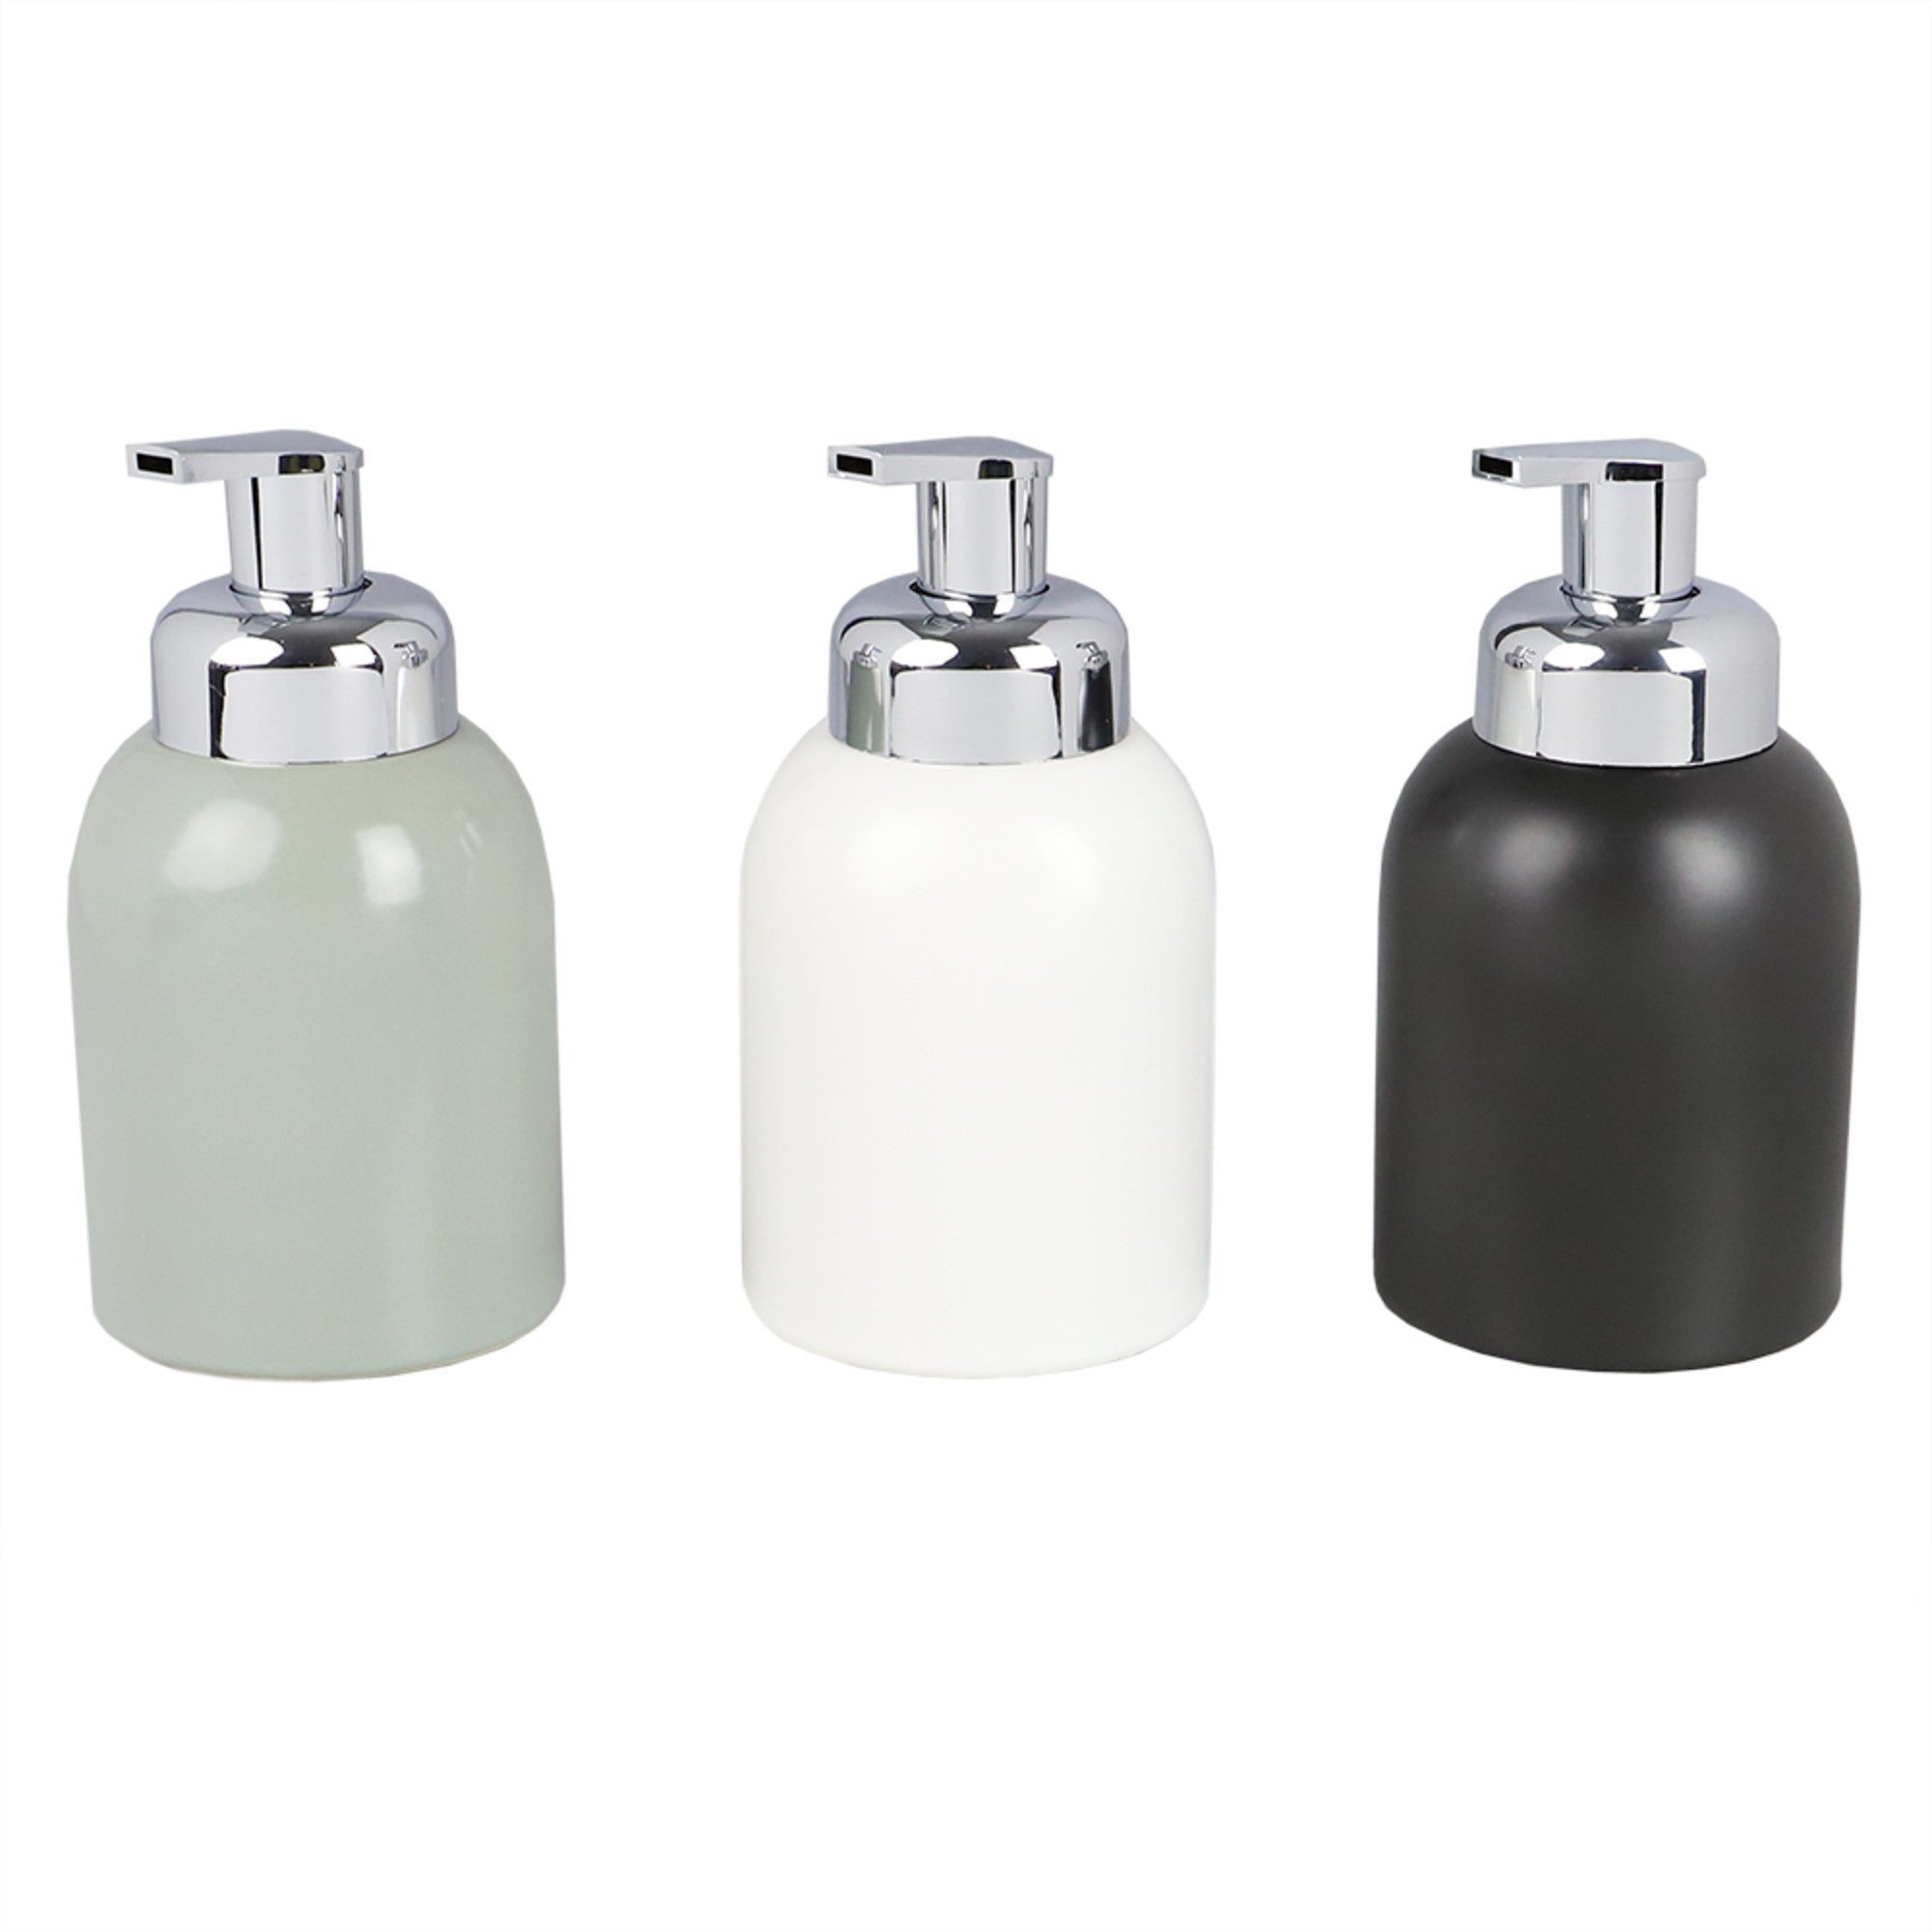 Home Basics 13.5 oz. Foaming Ceramic Soap Dispenser, BATH ORGANIZATION